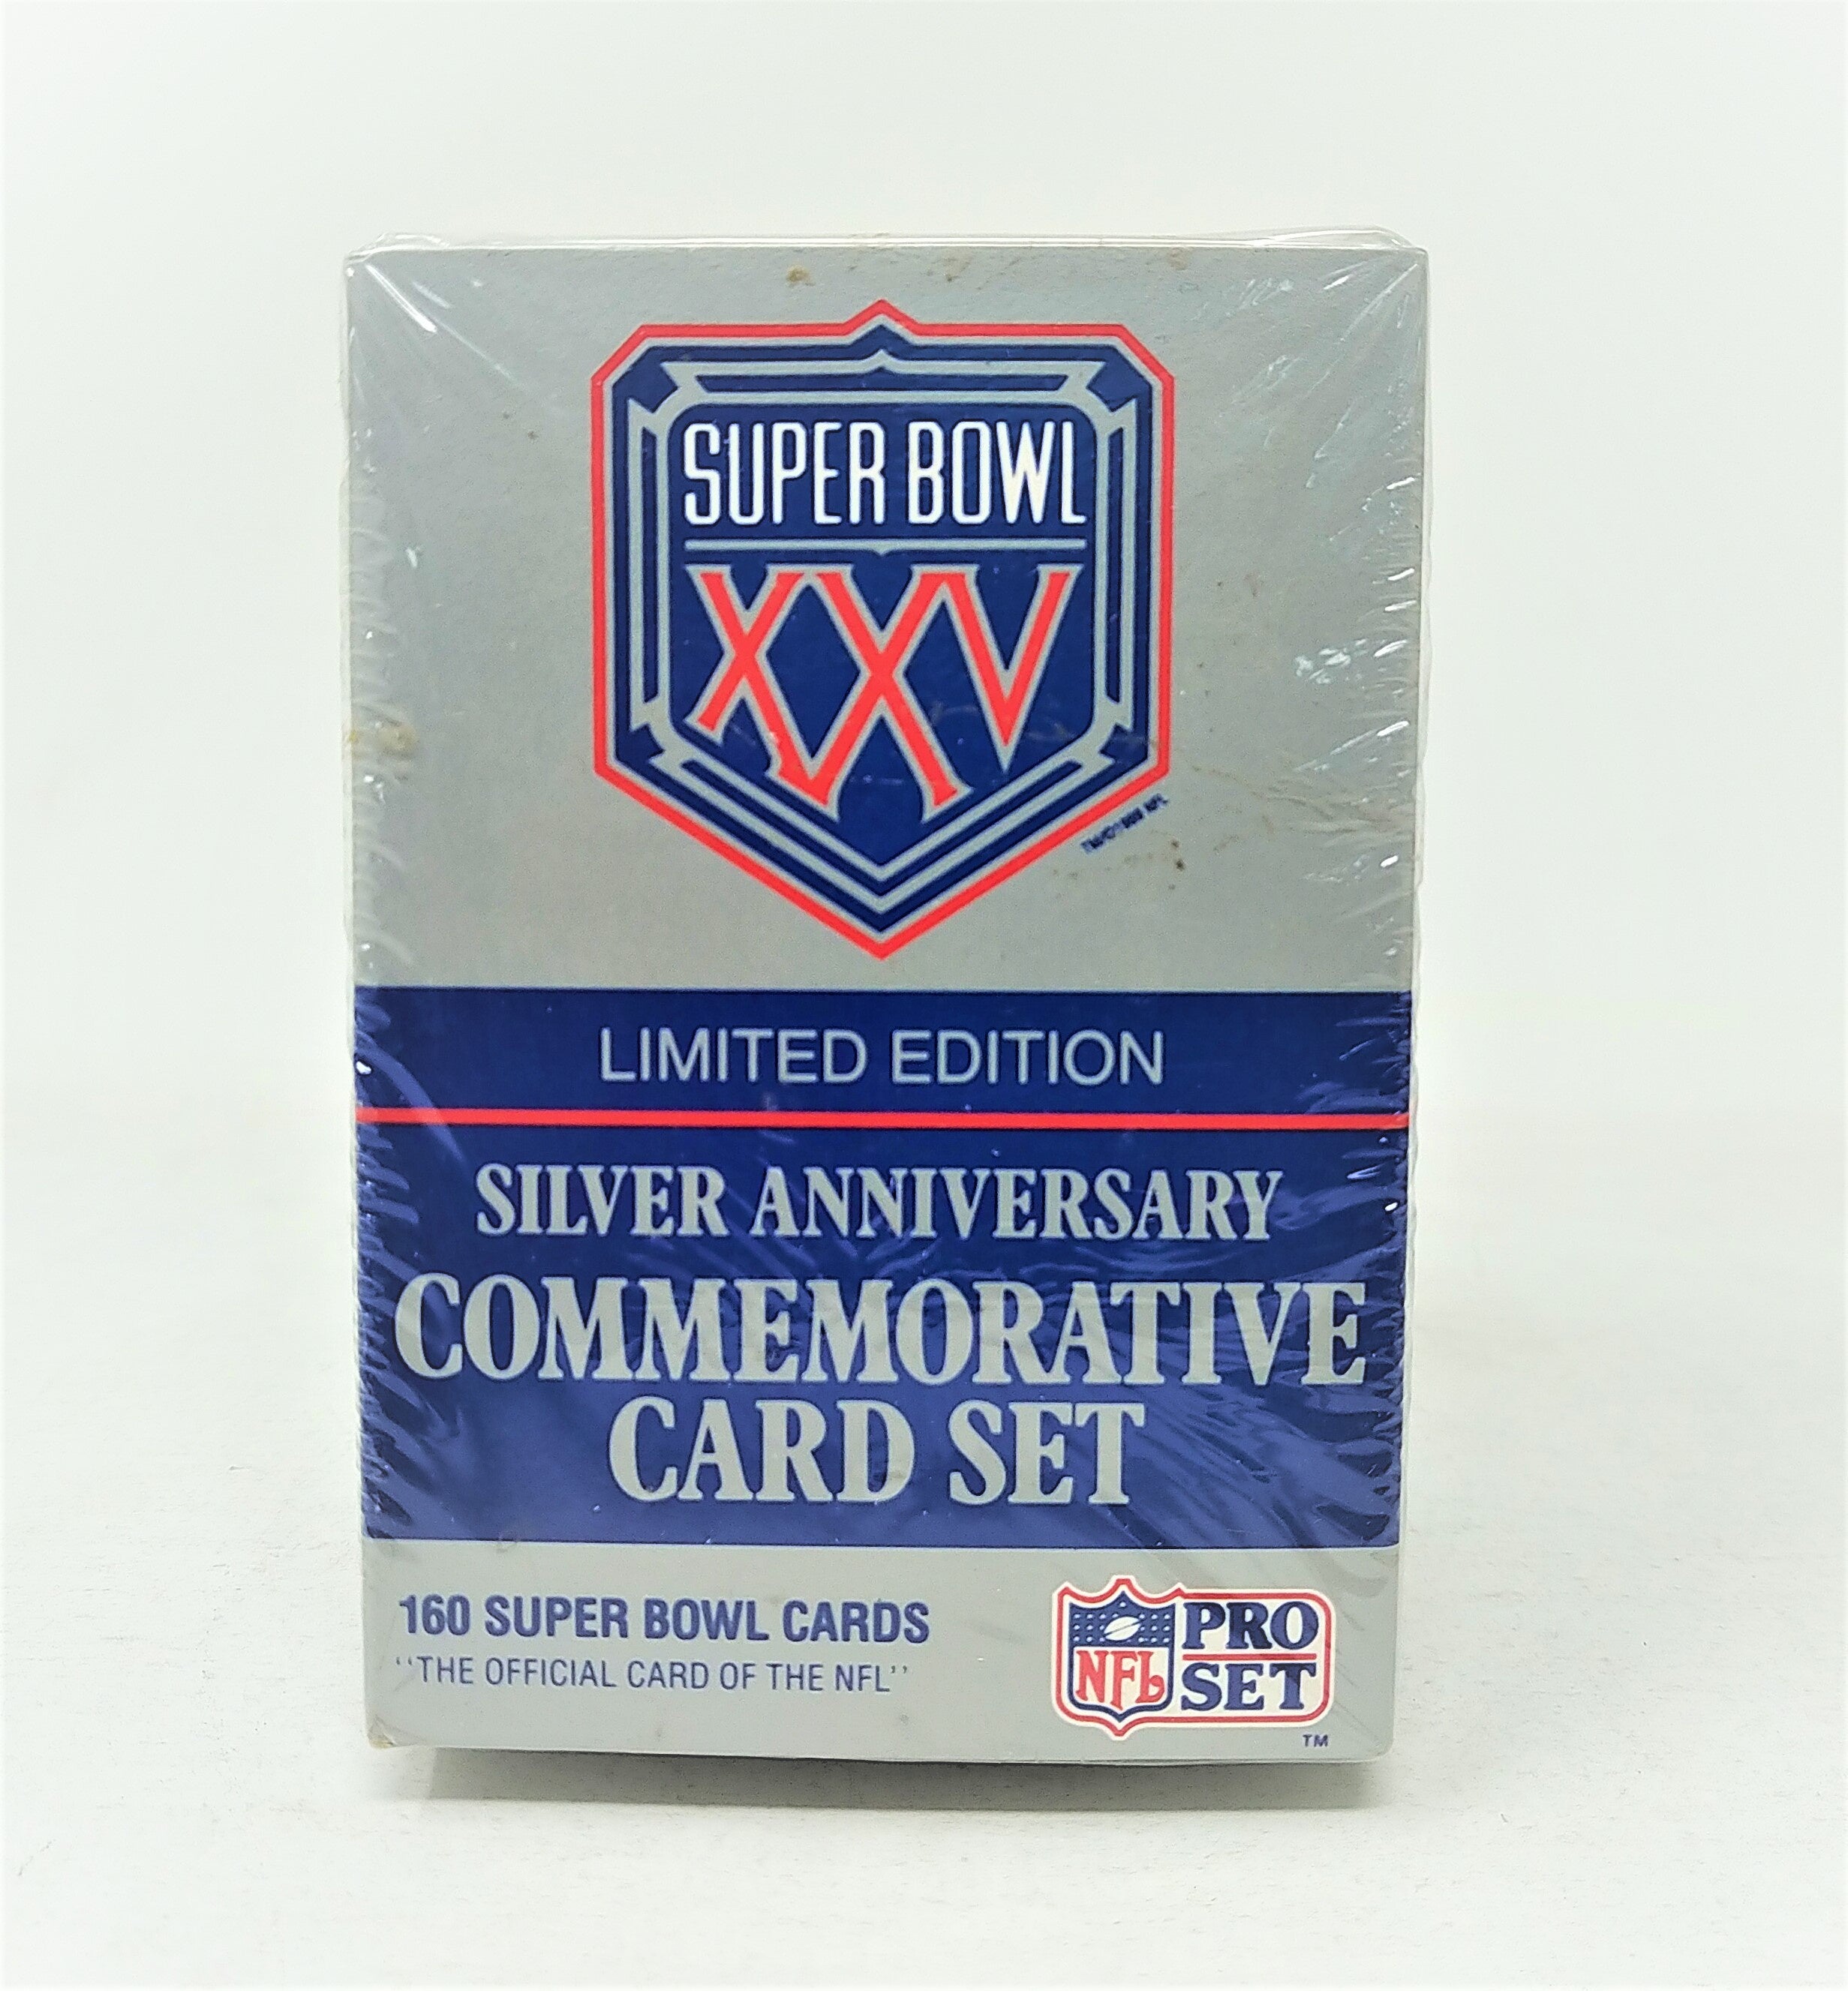 Super Bowl XXV Limited Edition Silver Anniversary Commemorative Card Set - Miraj Trading